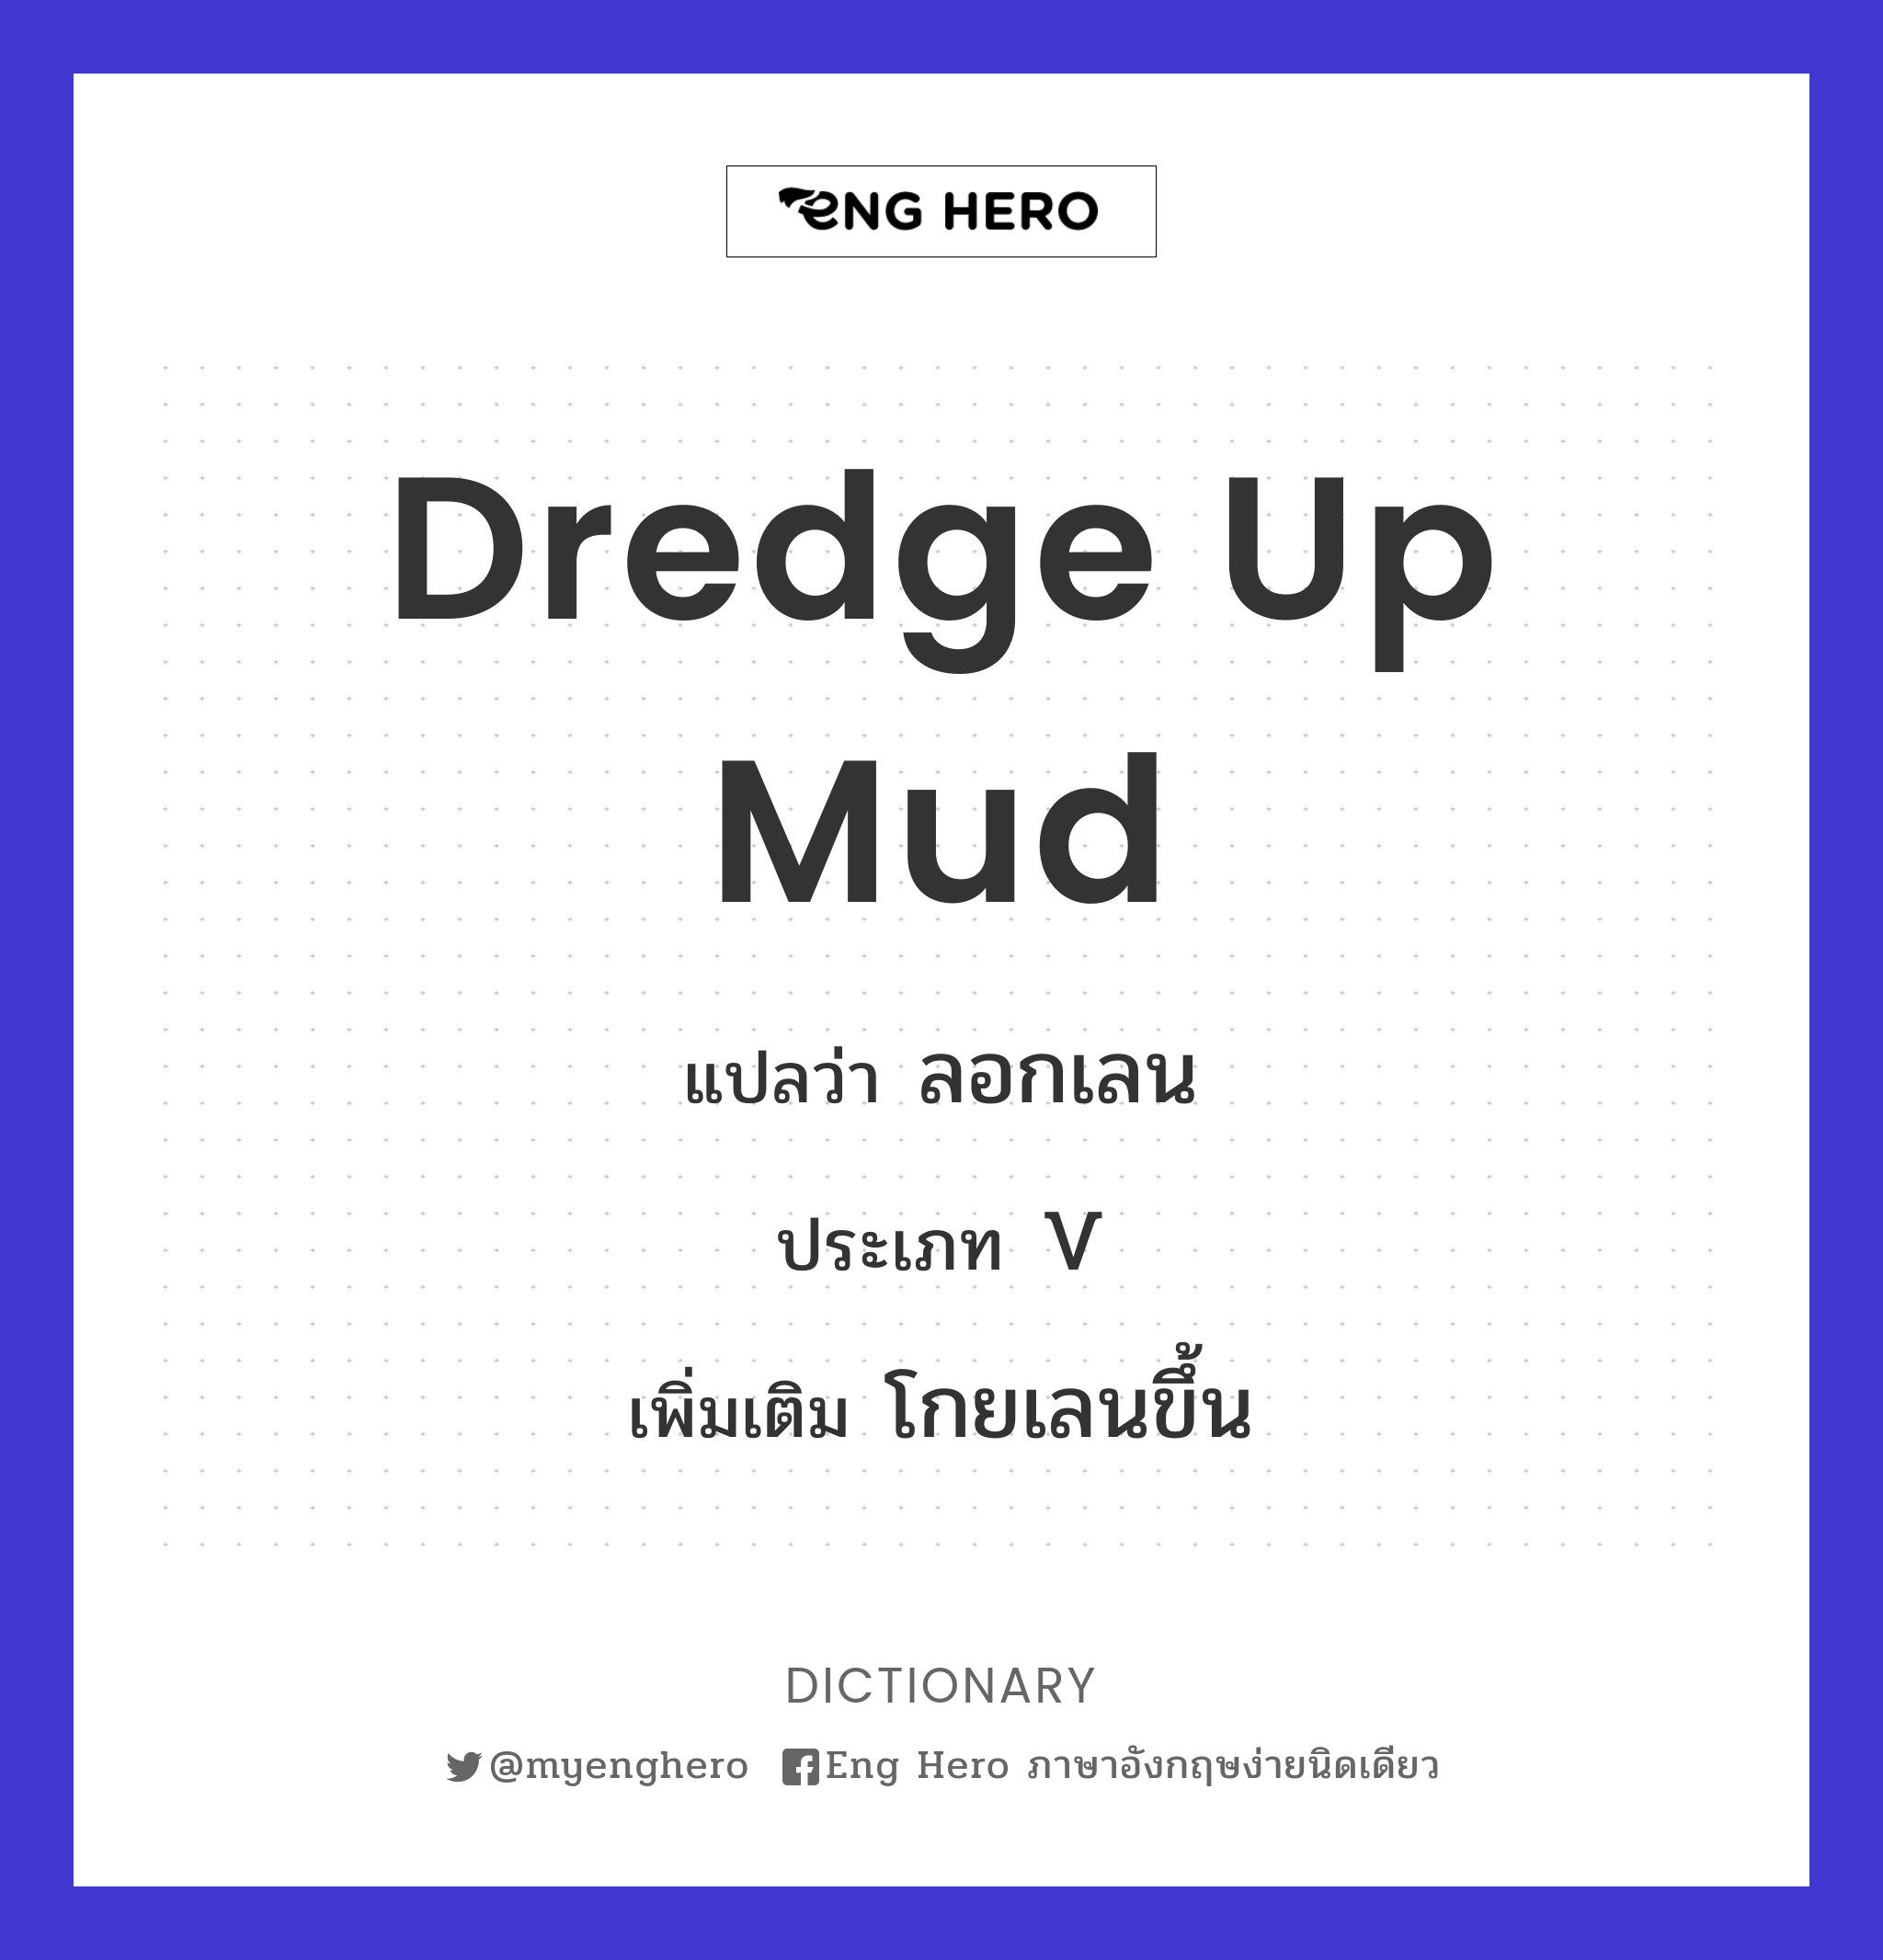 dredge up mud